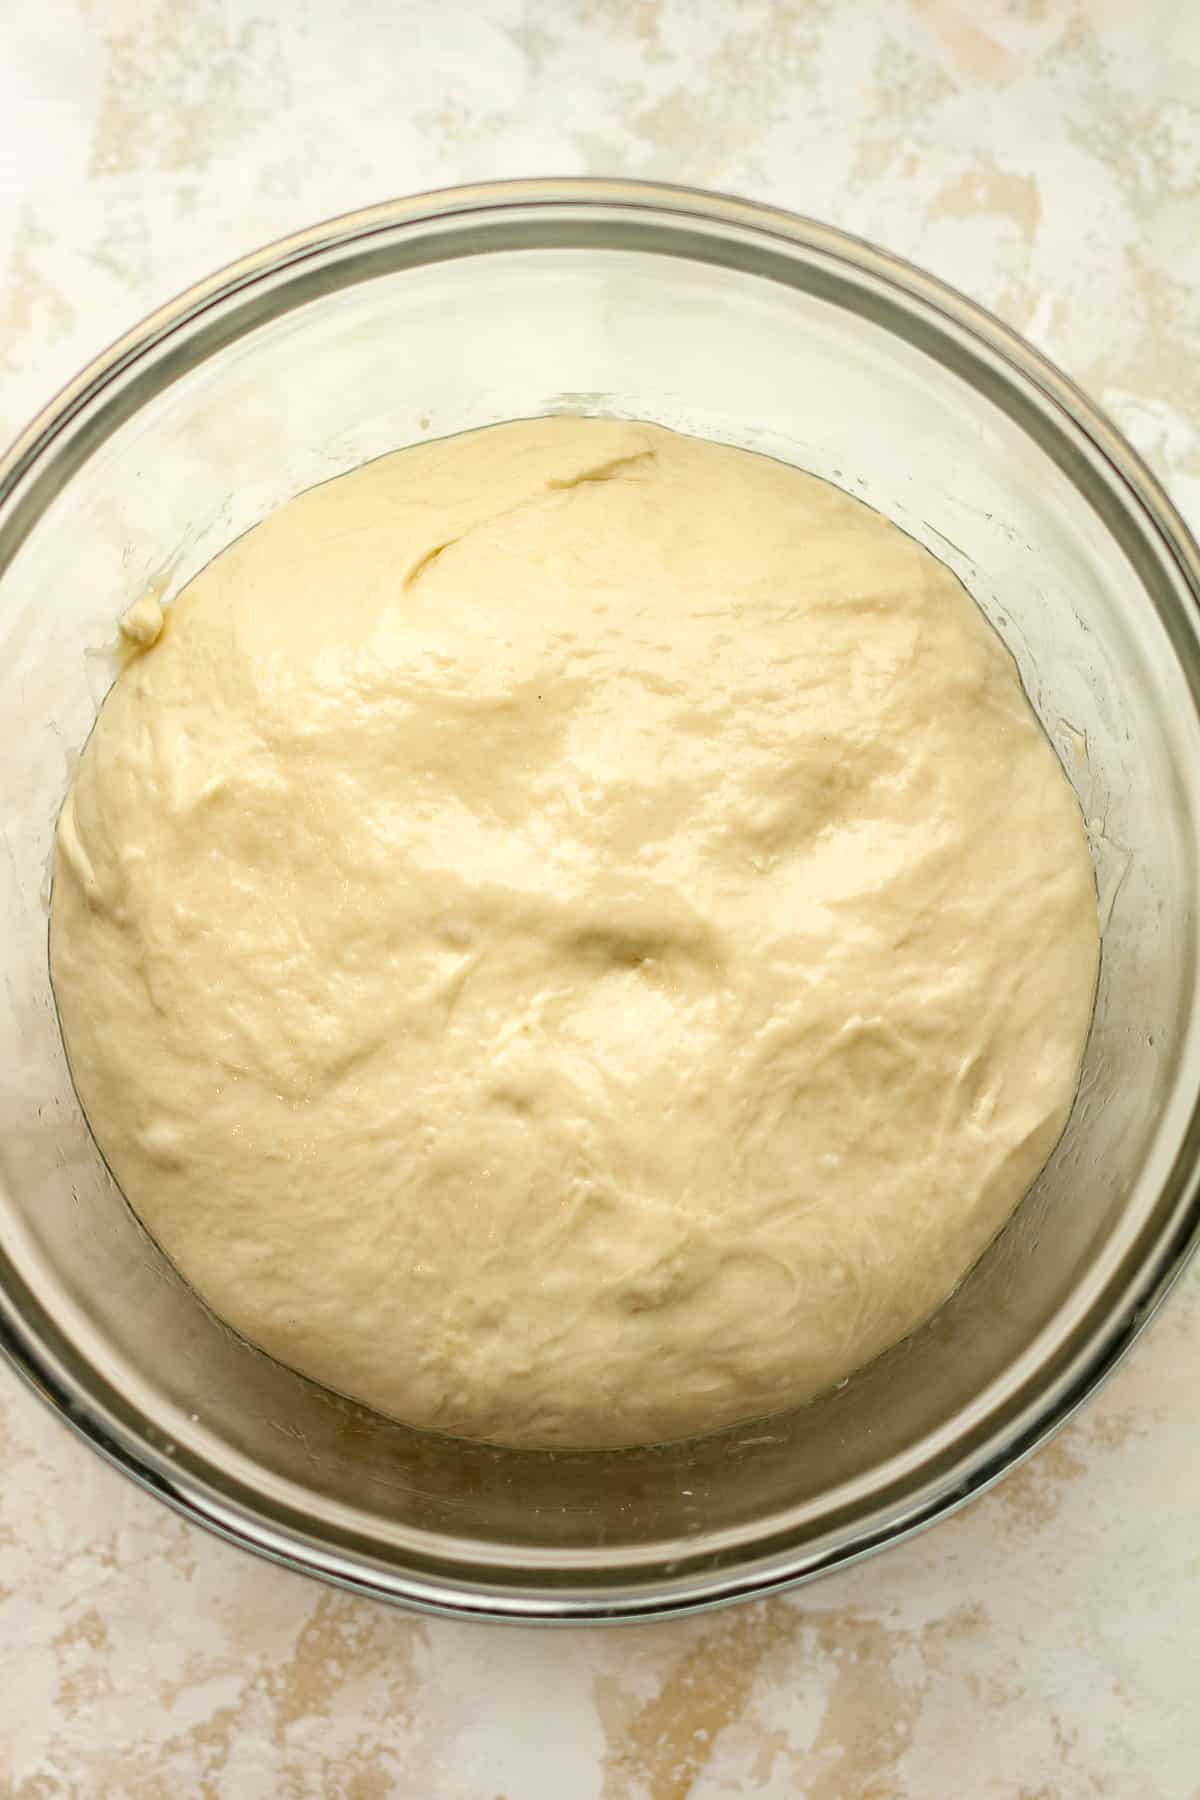 A bowl of the bread dough.